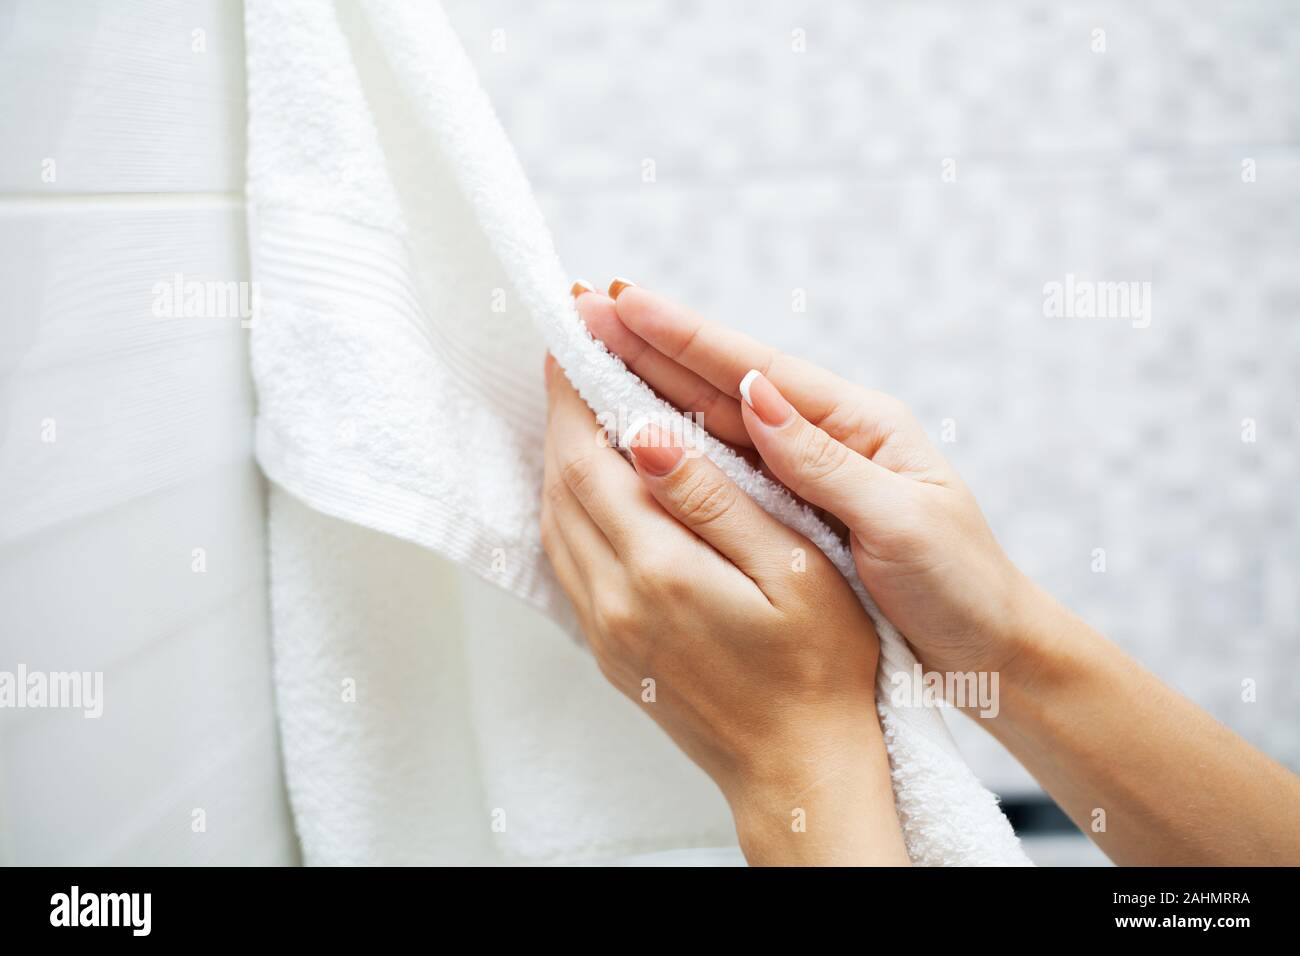 https://c8.alamy.com/comp/2AHMRRA/close-up-hands-use-white-towel-in-light-bathroom-2AHMRRA.jpg